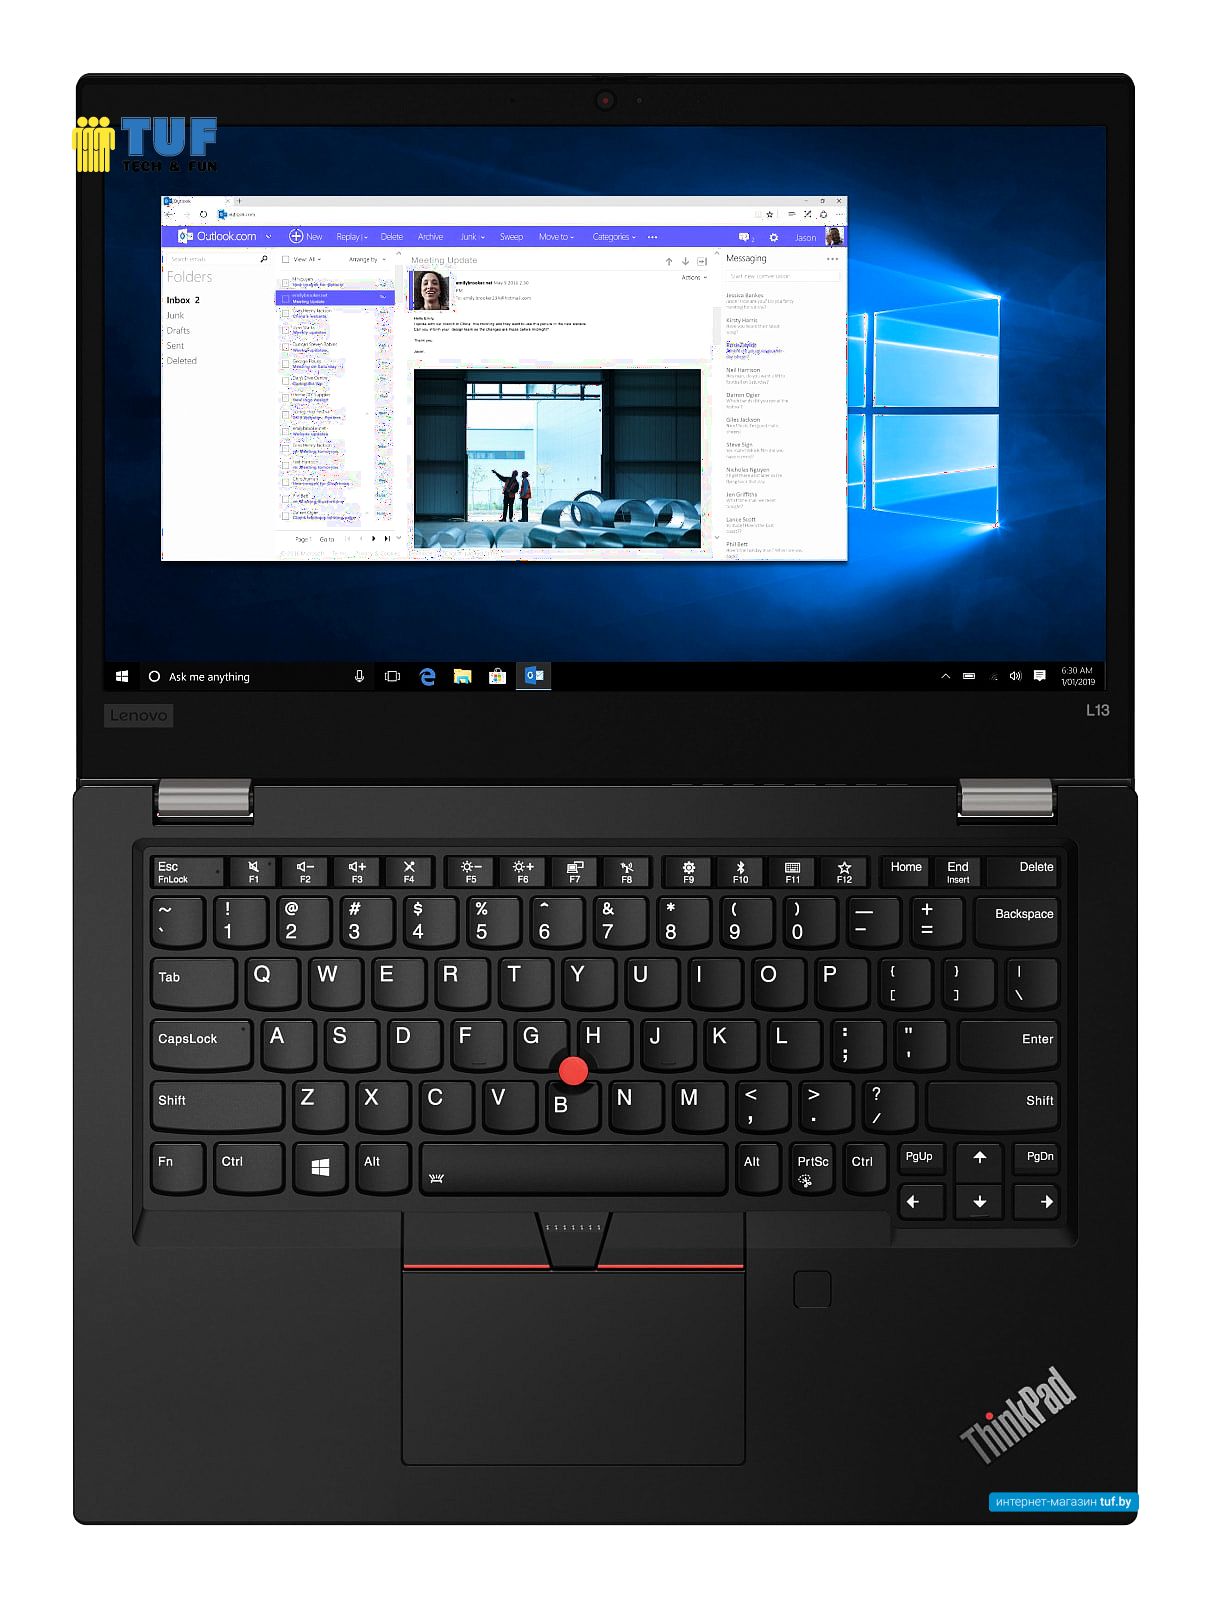 Ноутбук Lenovo ThinkPad L13 20R3001GRT